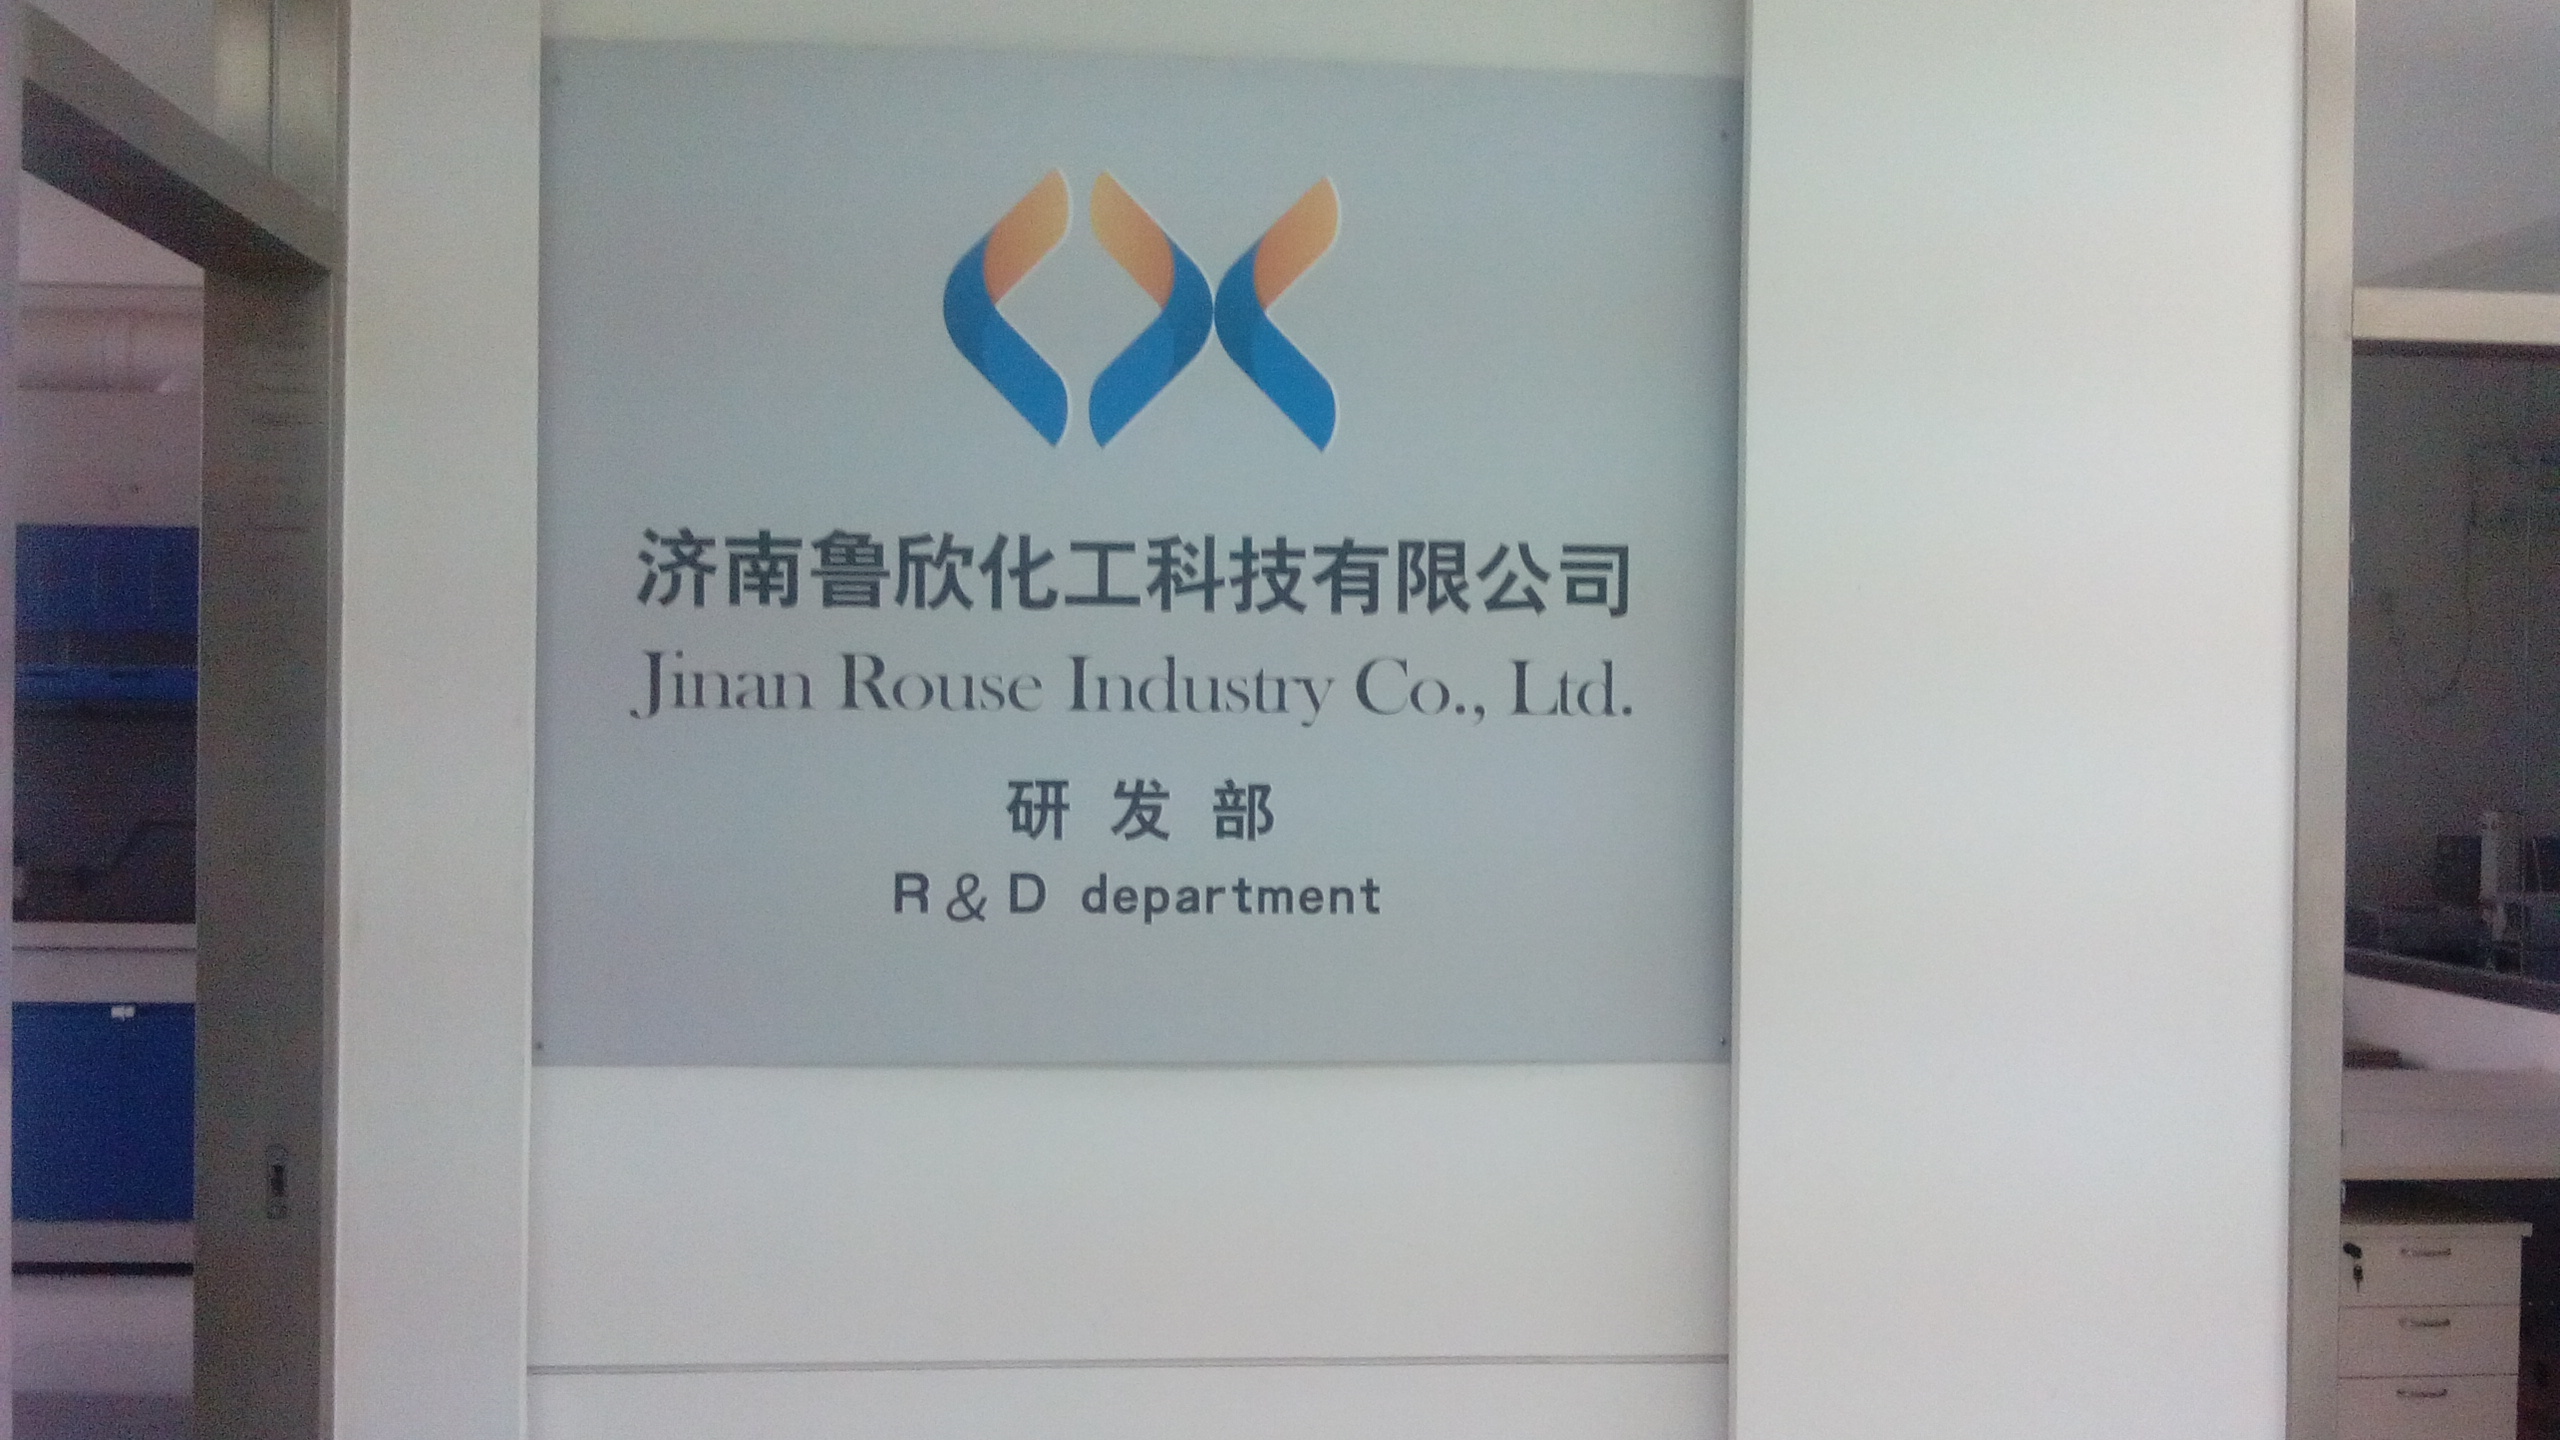 Jinan Rouse Industry Co., Ltd.